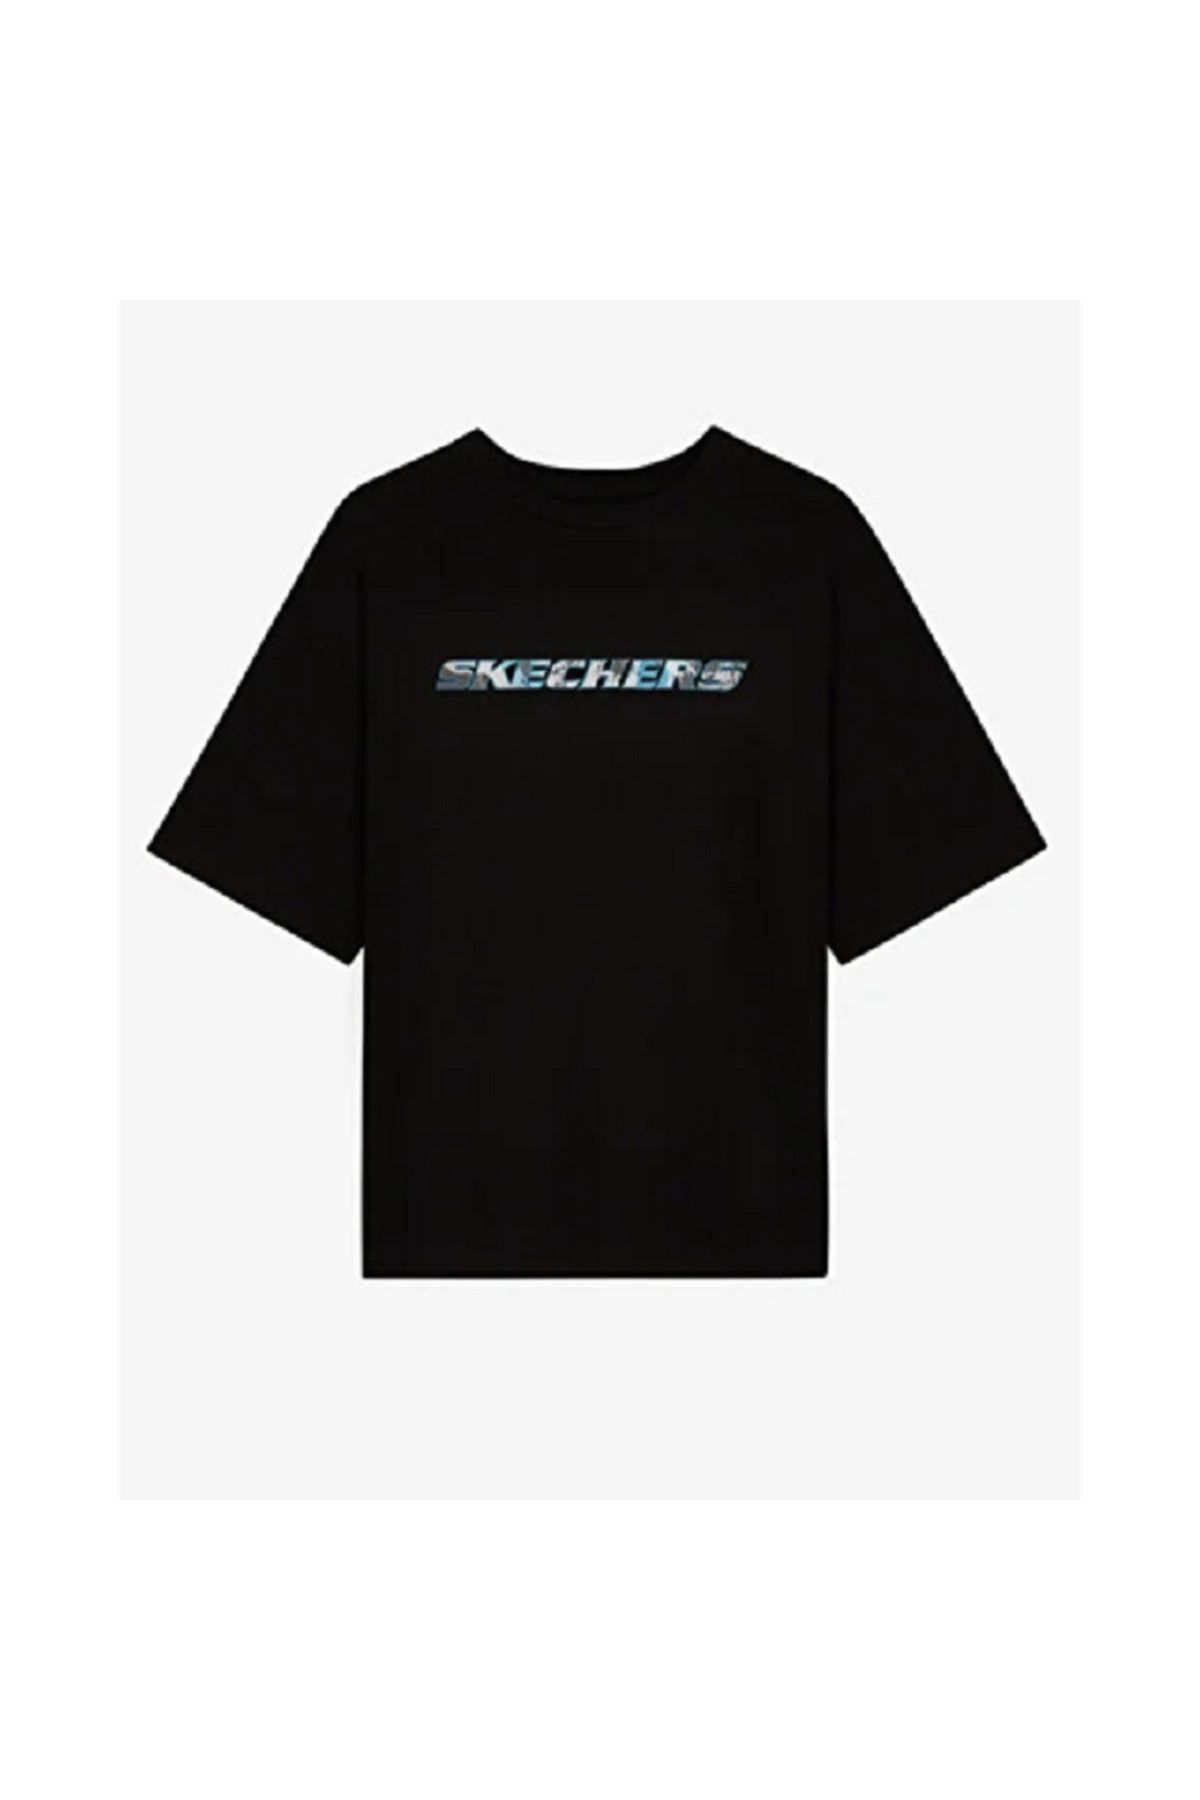 Skechers M Graphic Tee Crew Neck T-Shirt S232151-001